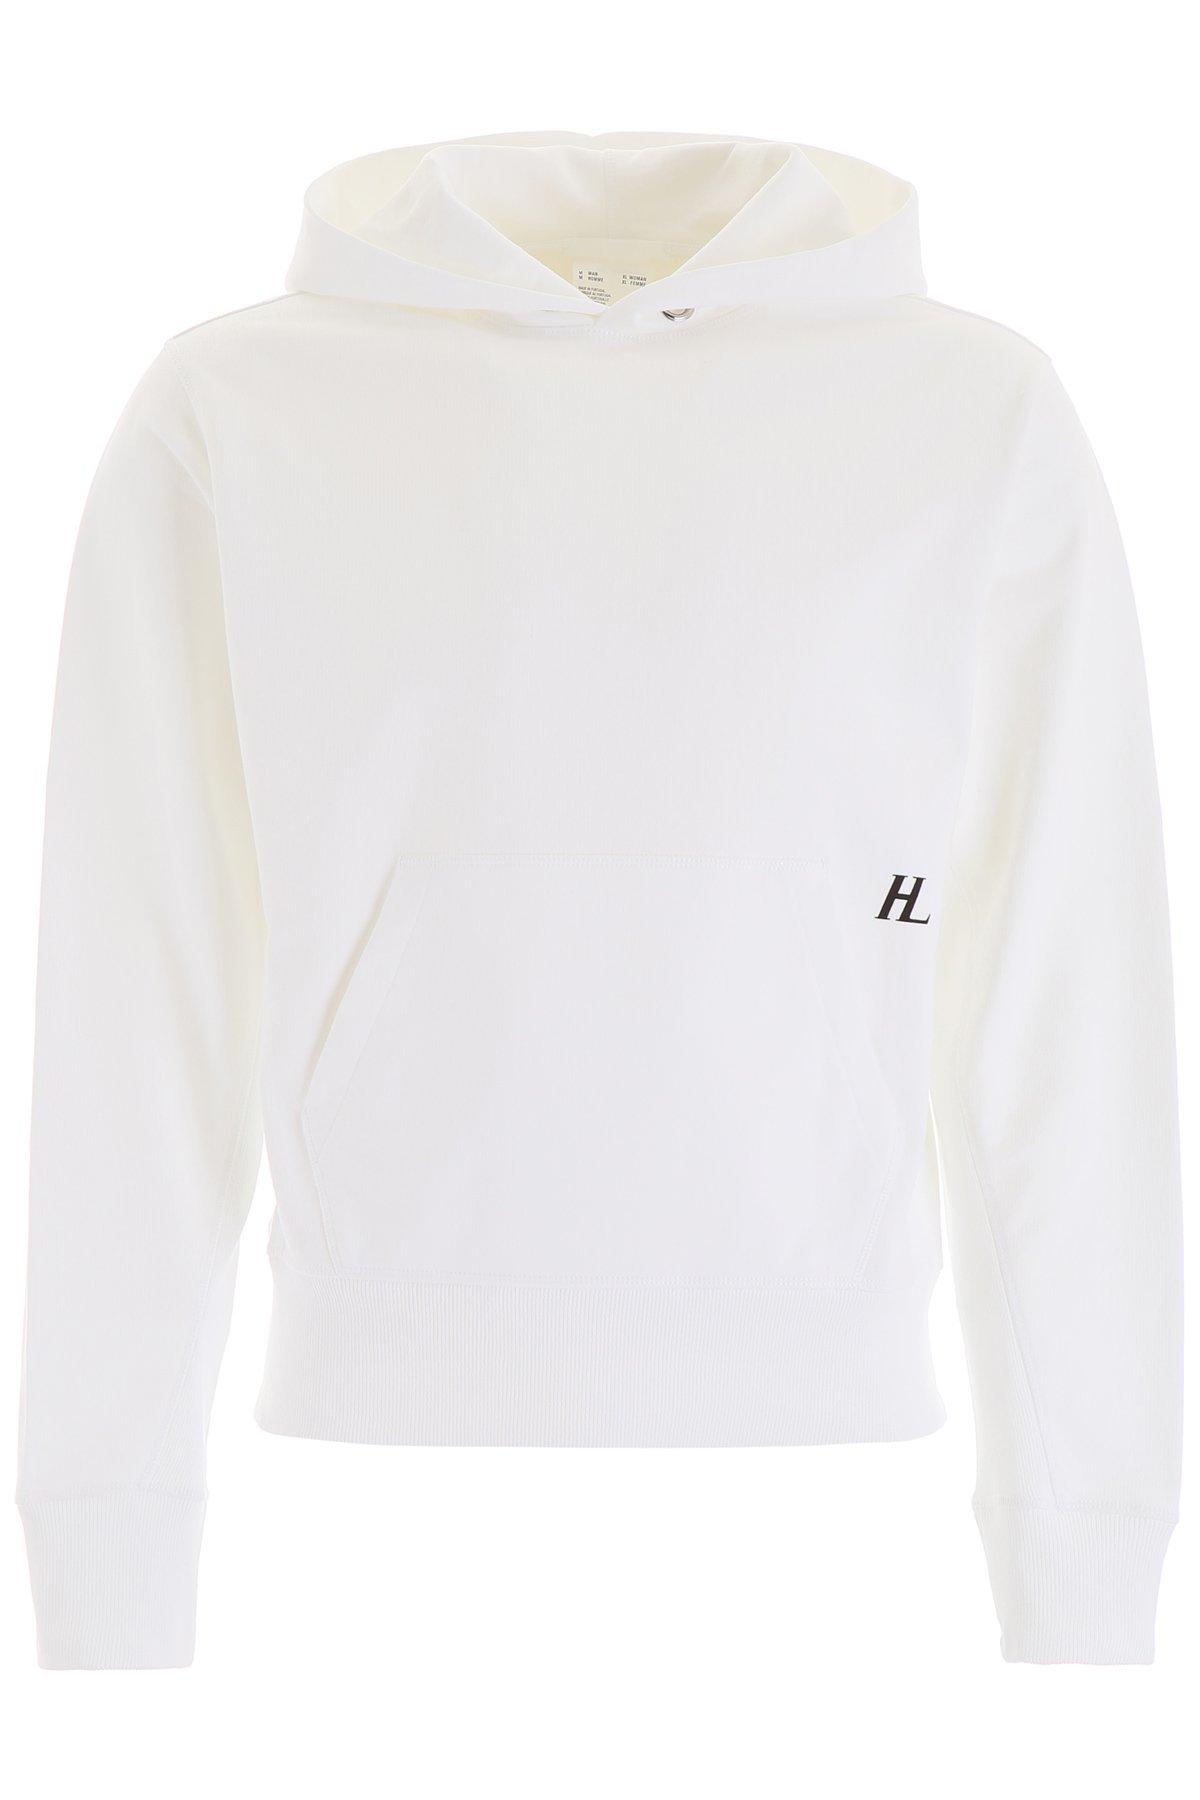 Helmut Lang Cotton Logo Print Hoodie in White for Men - Lyst